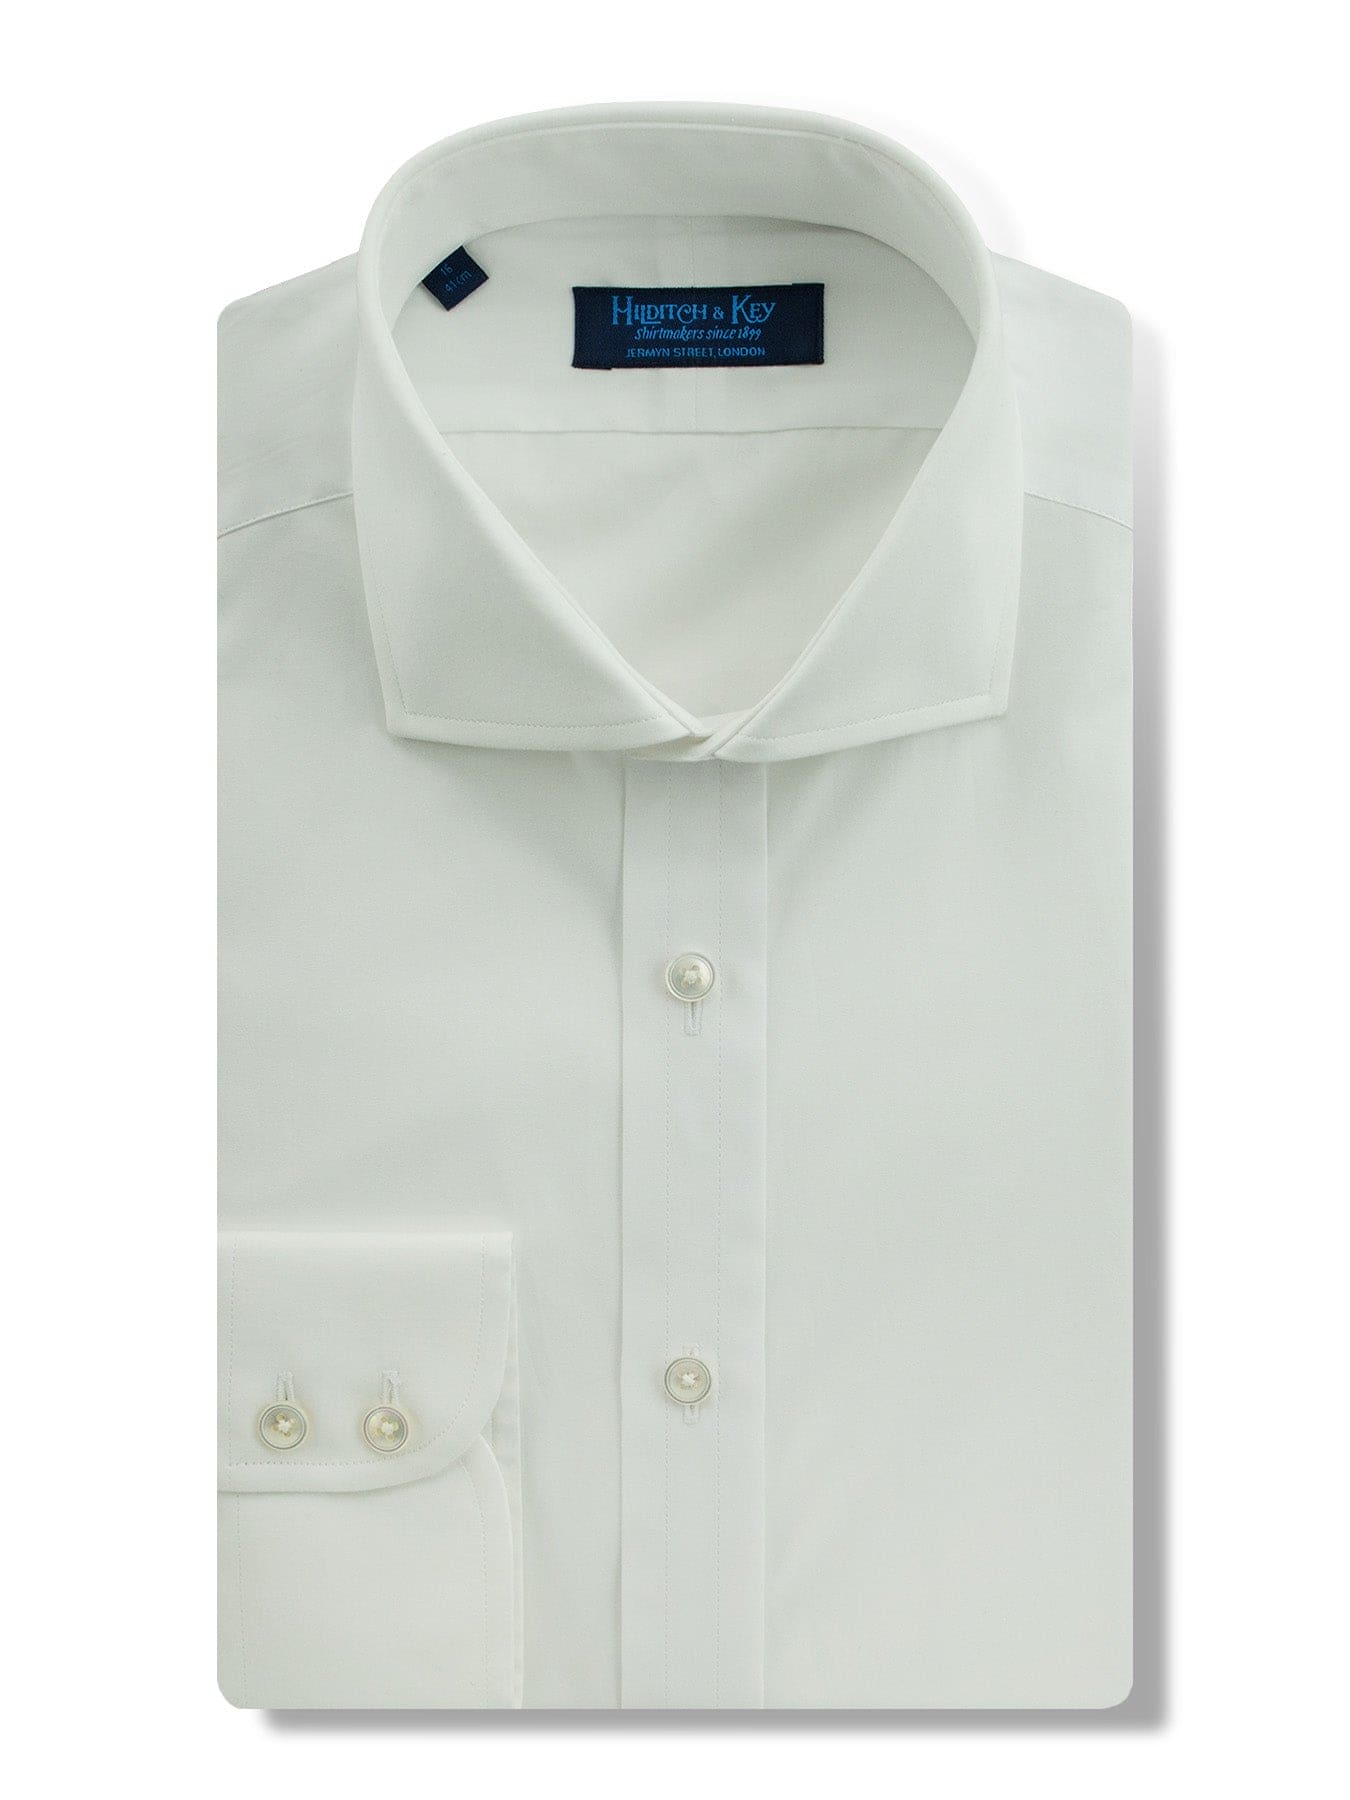 Contemporary Fit, Cutaway Collar, 2 Button Cuff Shirt in Plain White Poplin